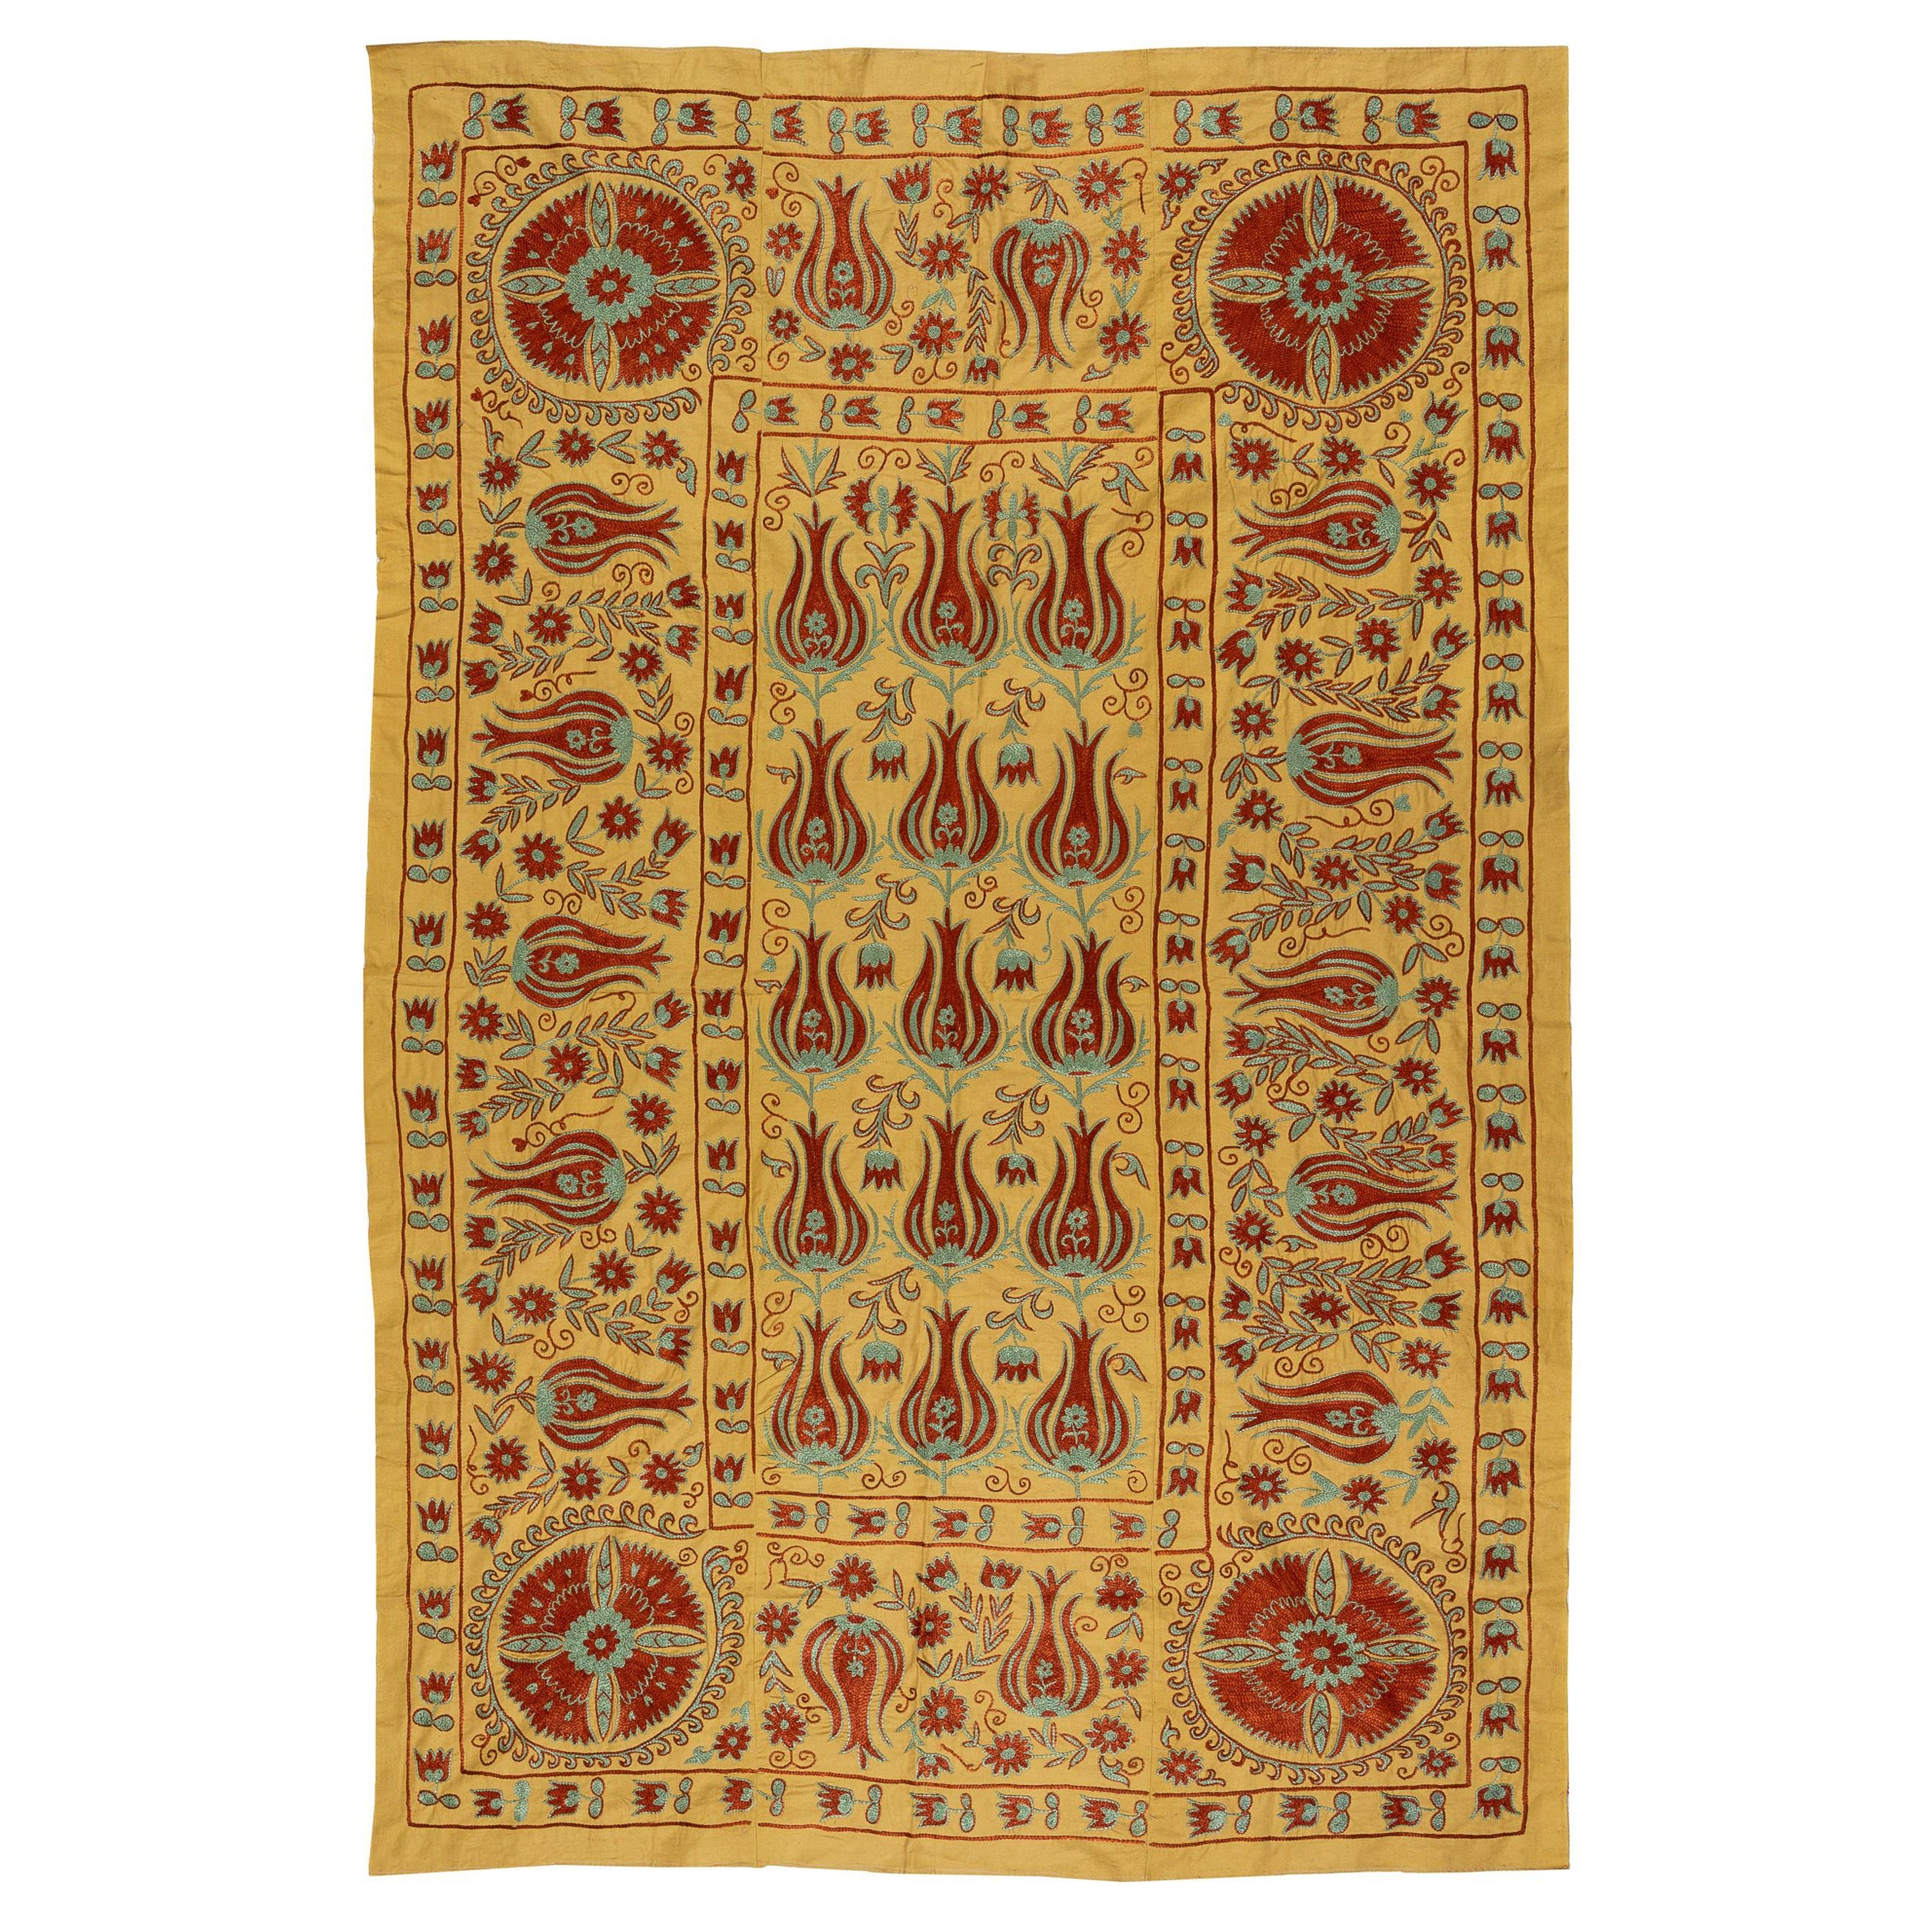 4.6x7 ft Decorative Uzbek Suzani Textile, Embroidered Silk Wall Hanging